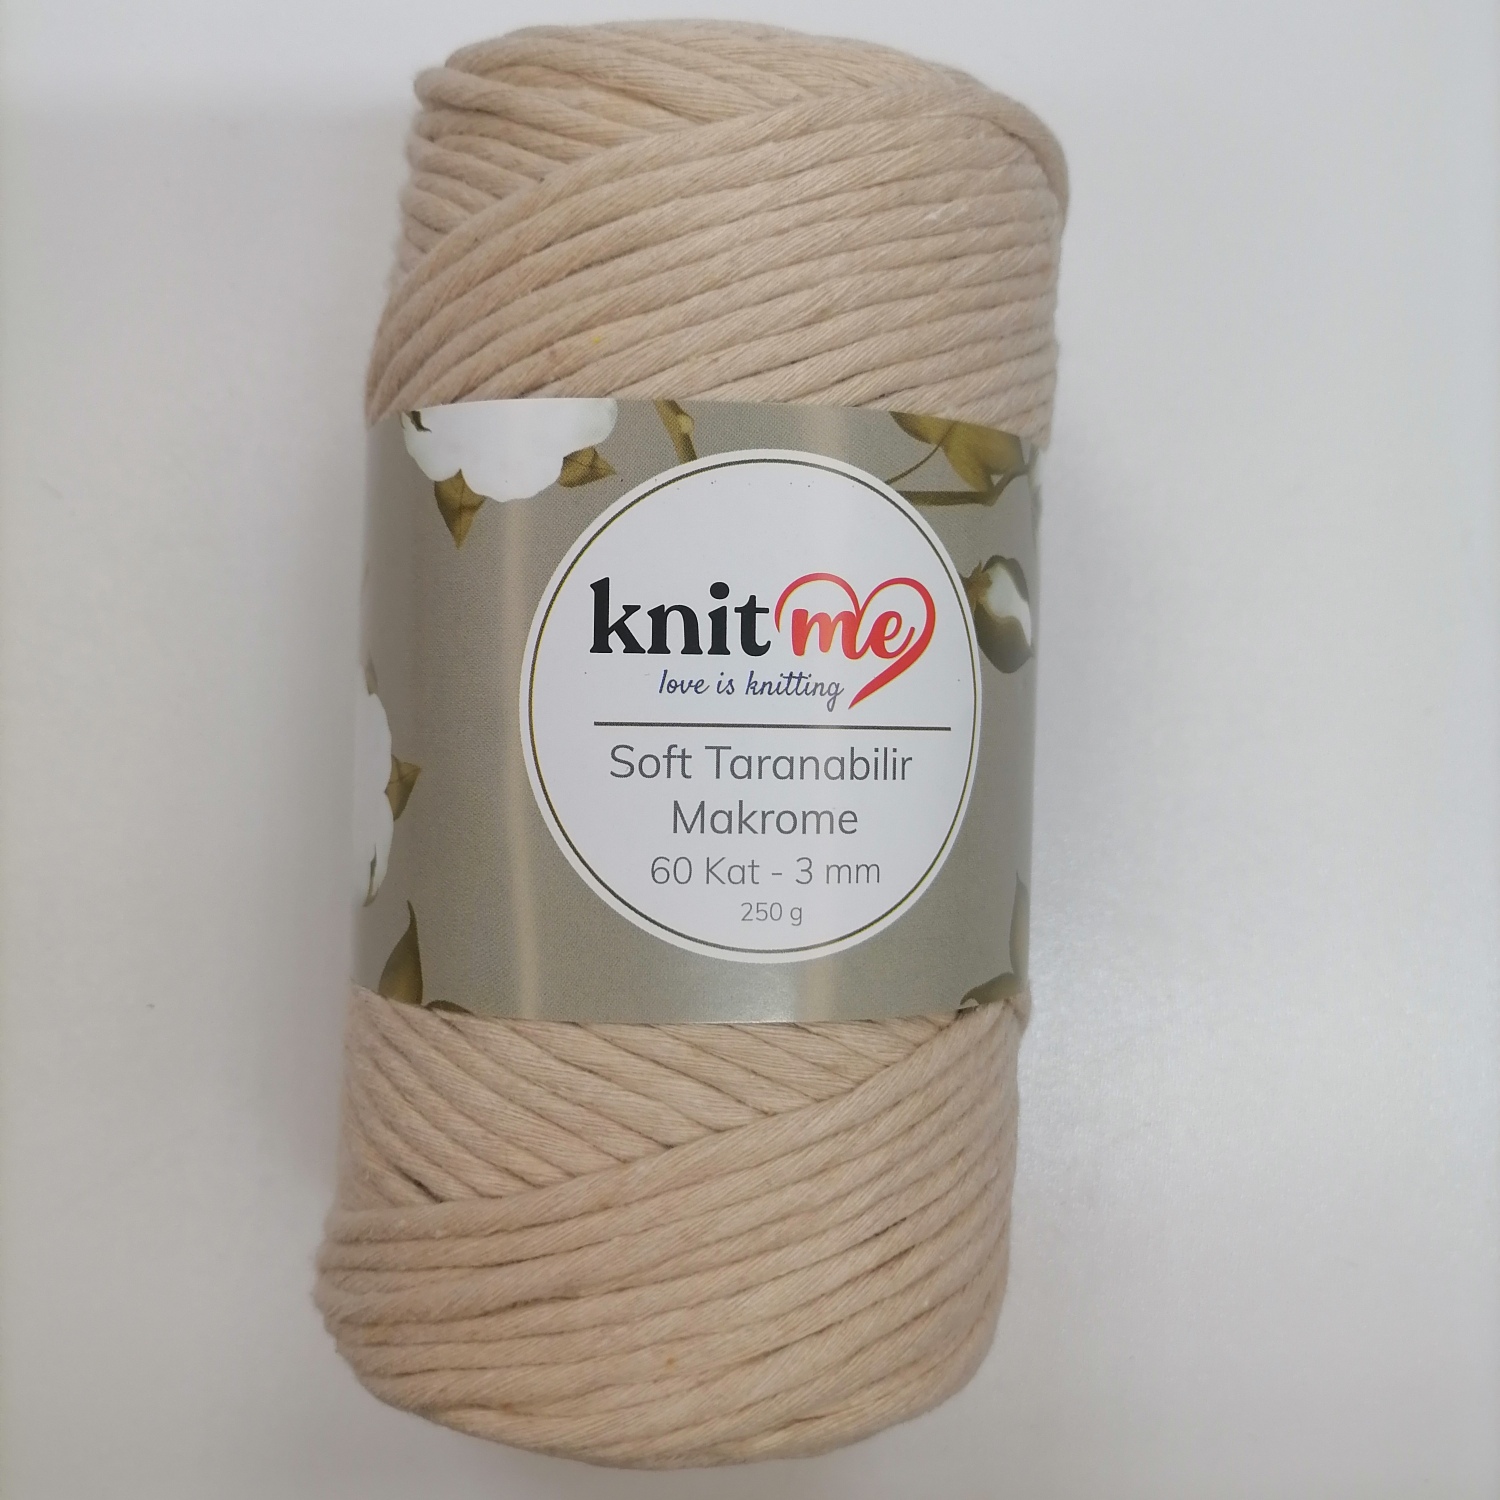 Soft Macrame 3 mm. Knit Me KA10307 - бежевый